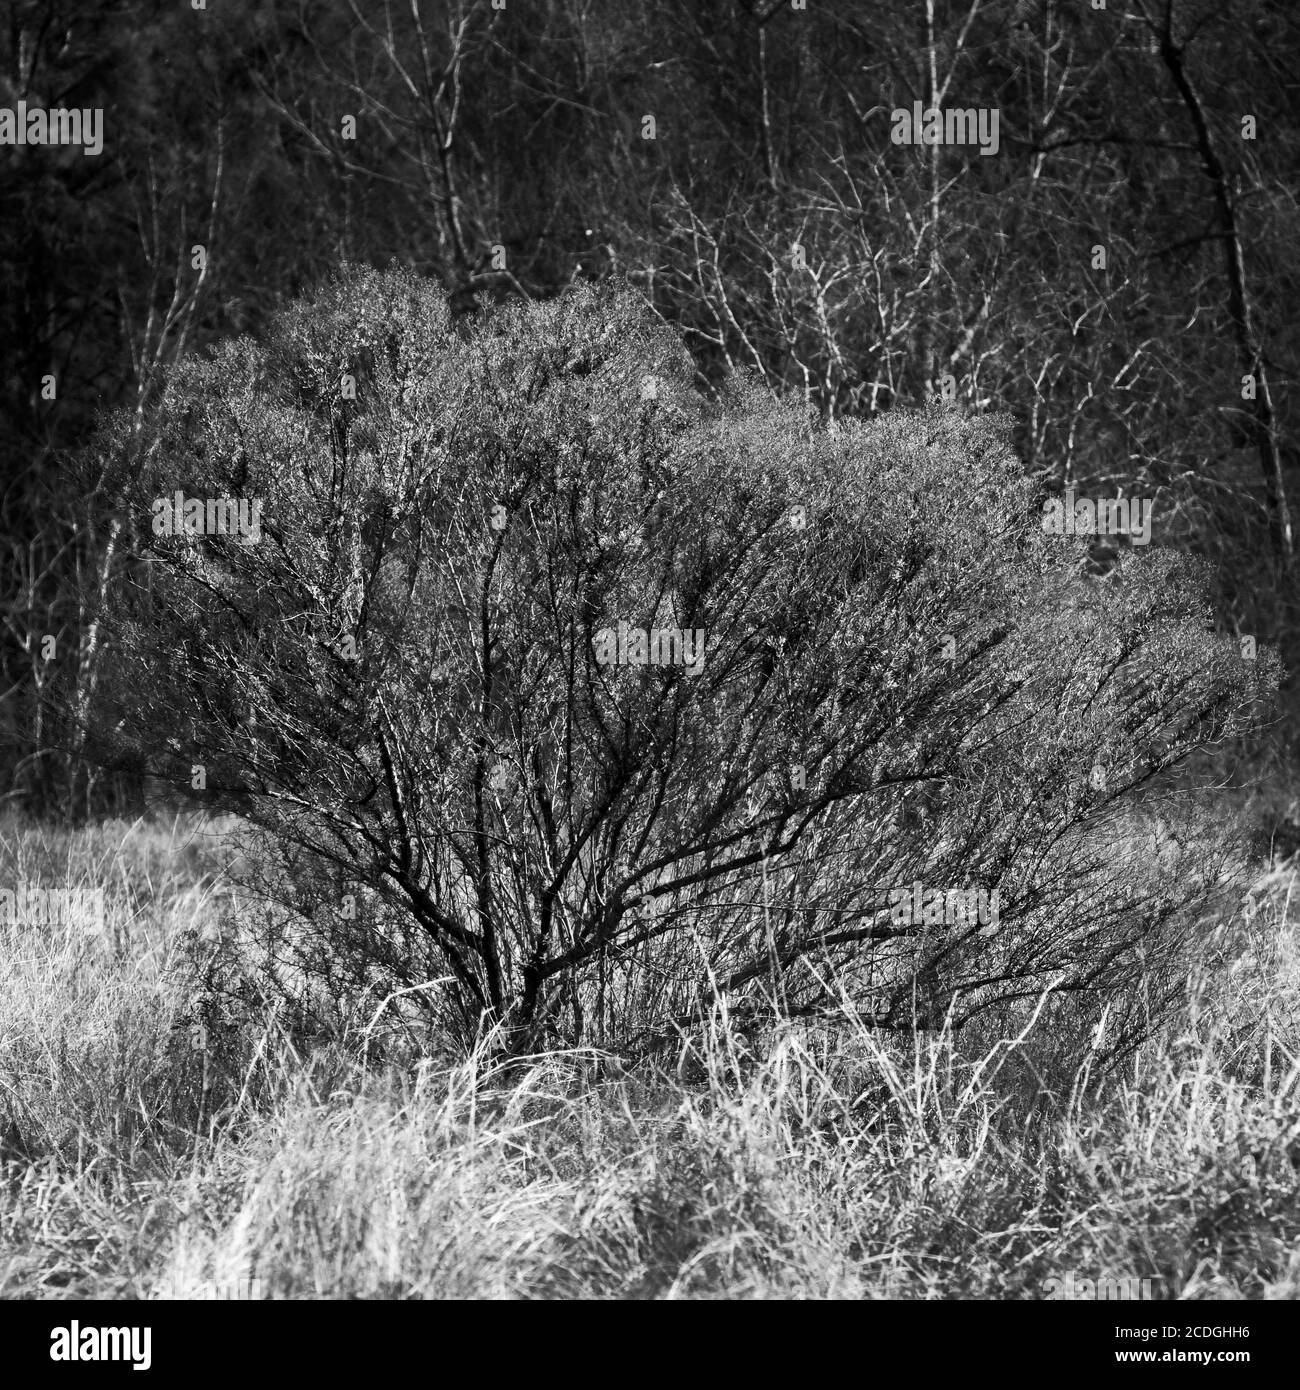 The Woodlands TX USA - 02-07-2020 - Green Bush in Ein Trockengras-Feld in S&W Stockfoto